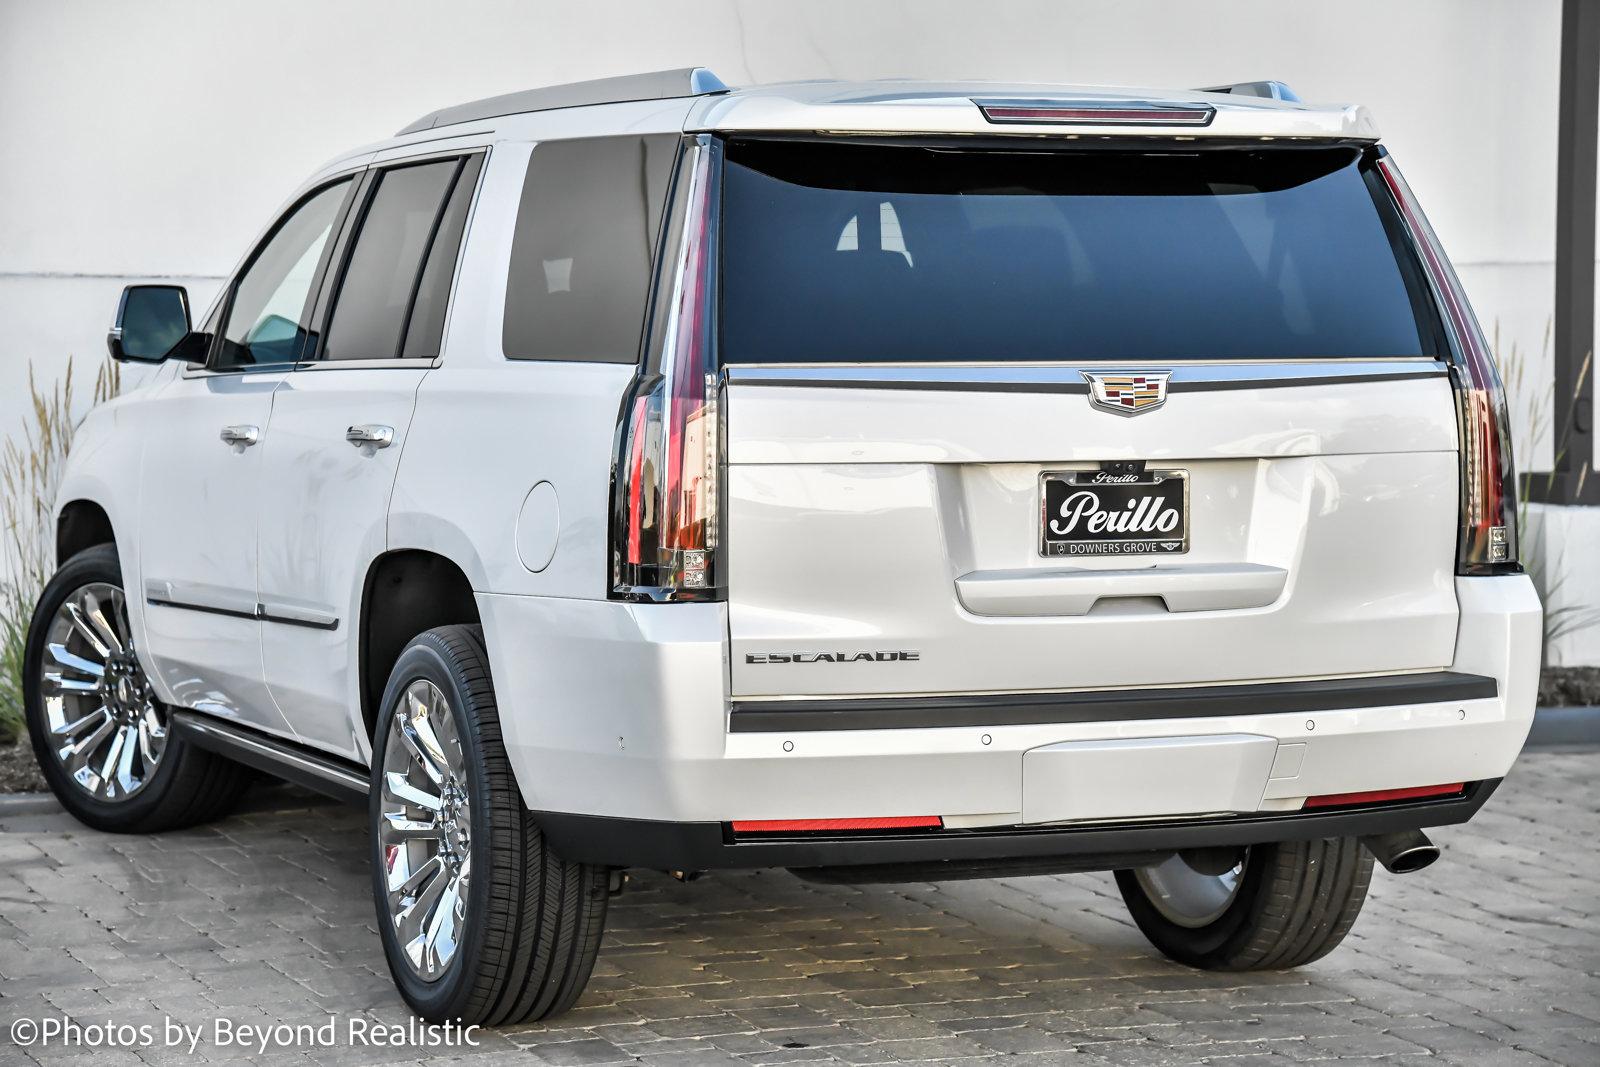 Used 2020 Cadillac Escalade Premium Luxury | Downers Grove, IL